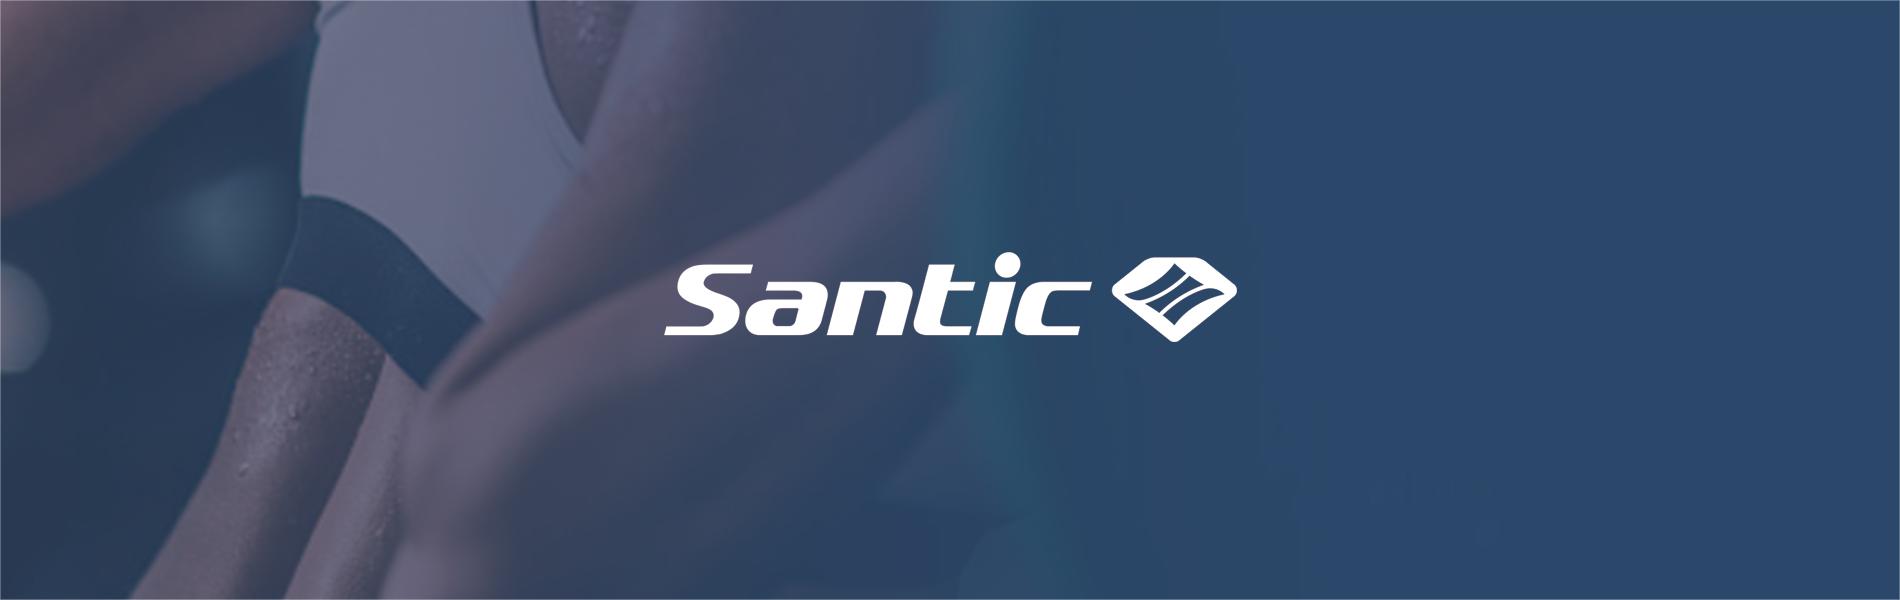 Santicスポーツウェア - 高品質アスレチックウェアの専門家